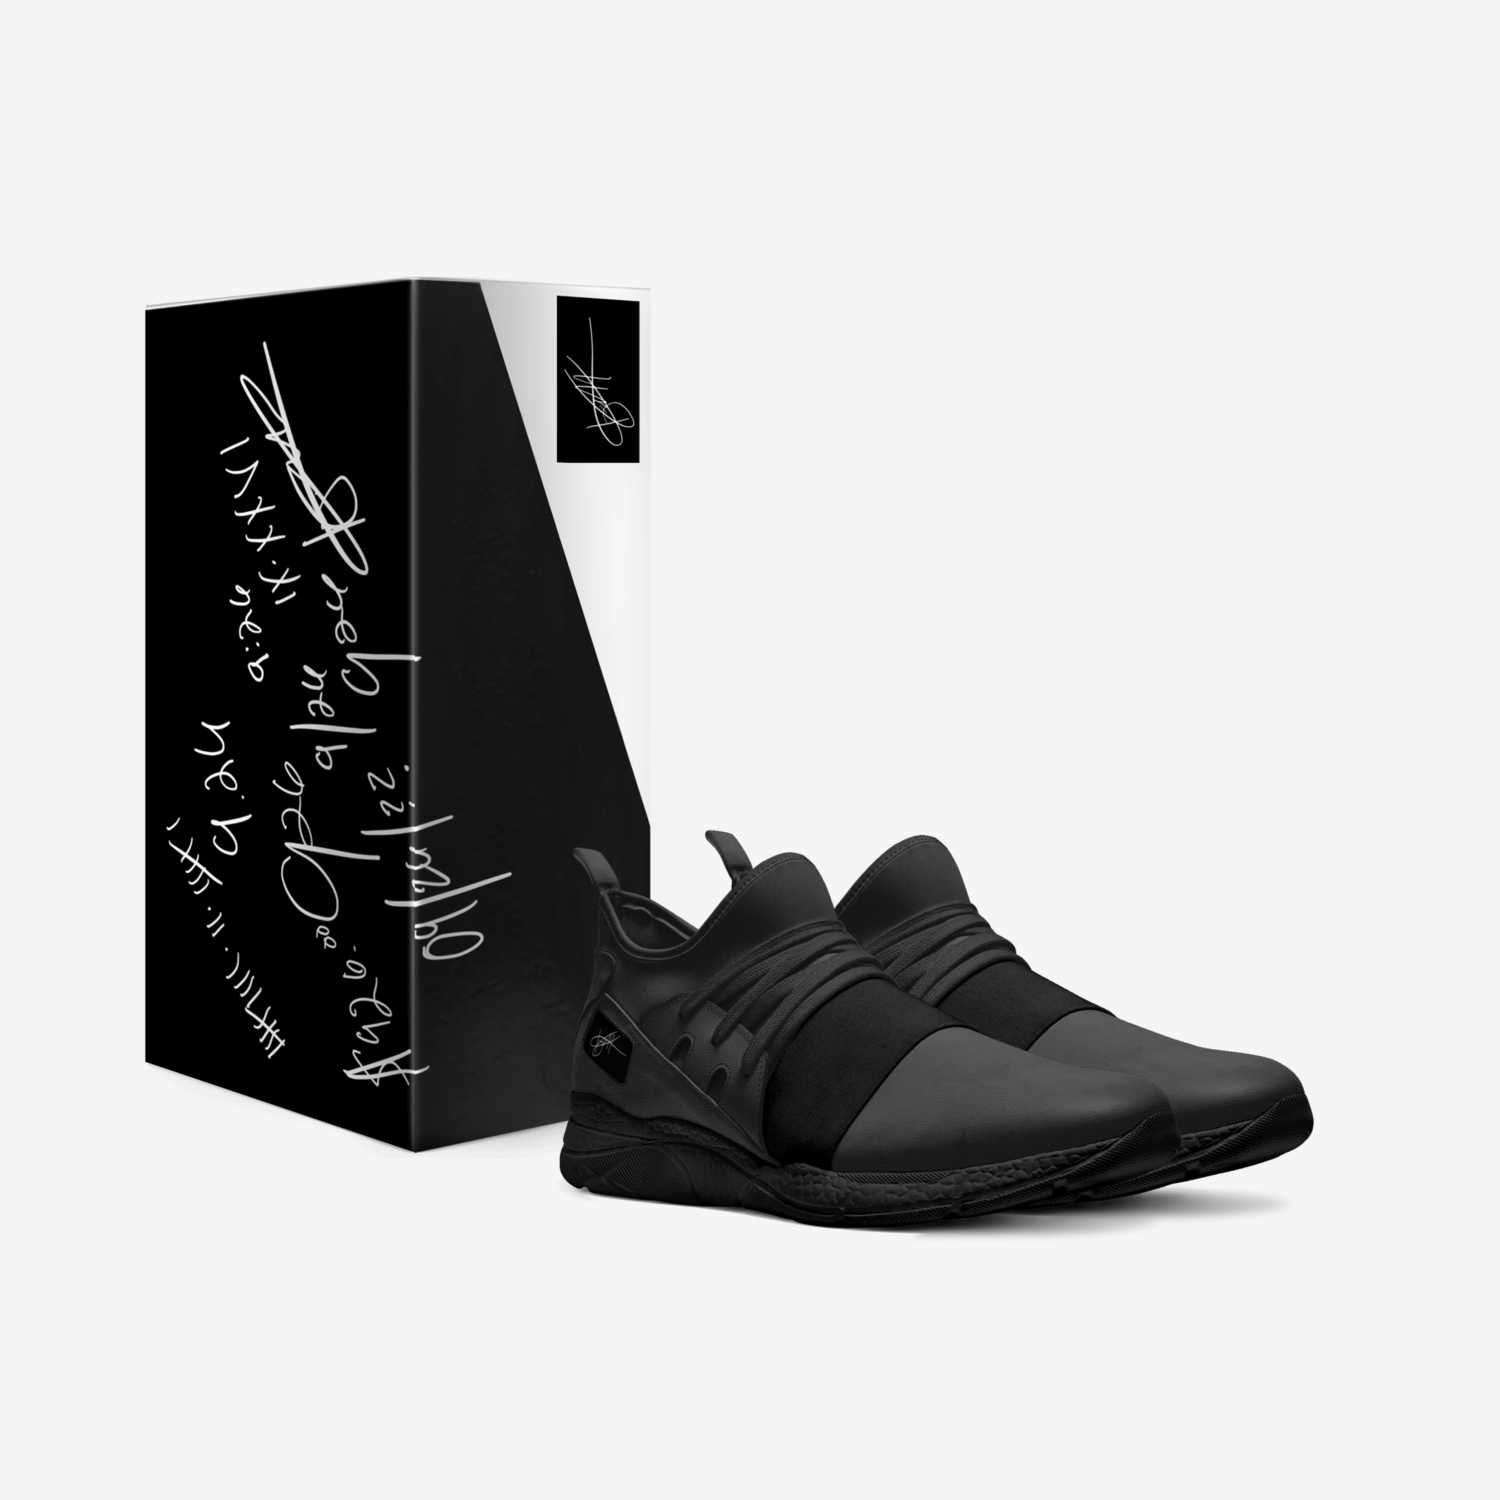 Keyon Isaac custom made in Italy shoes by Keyon Mack | Box view